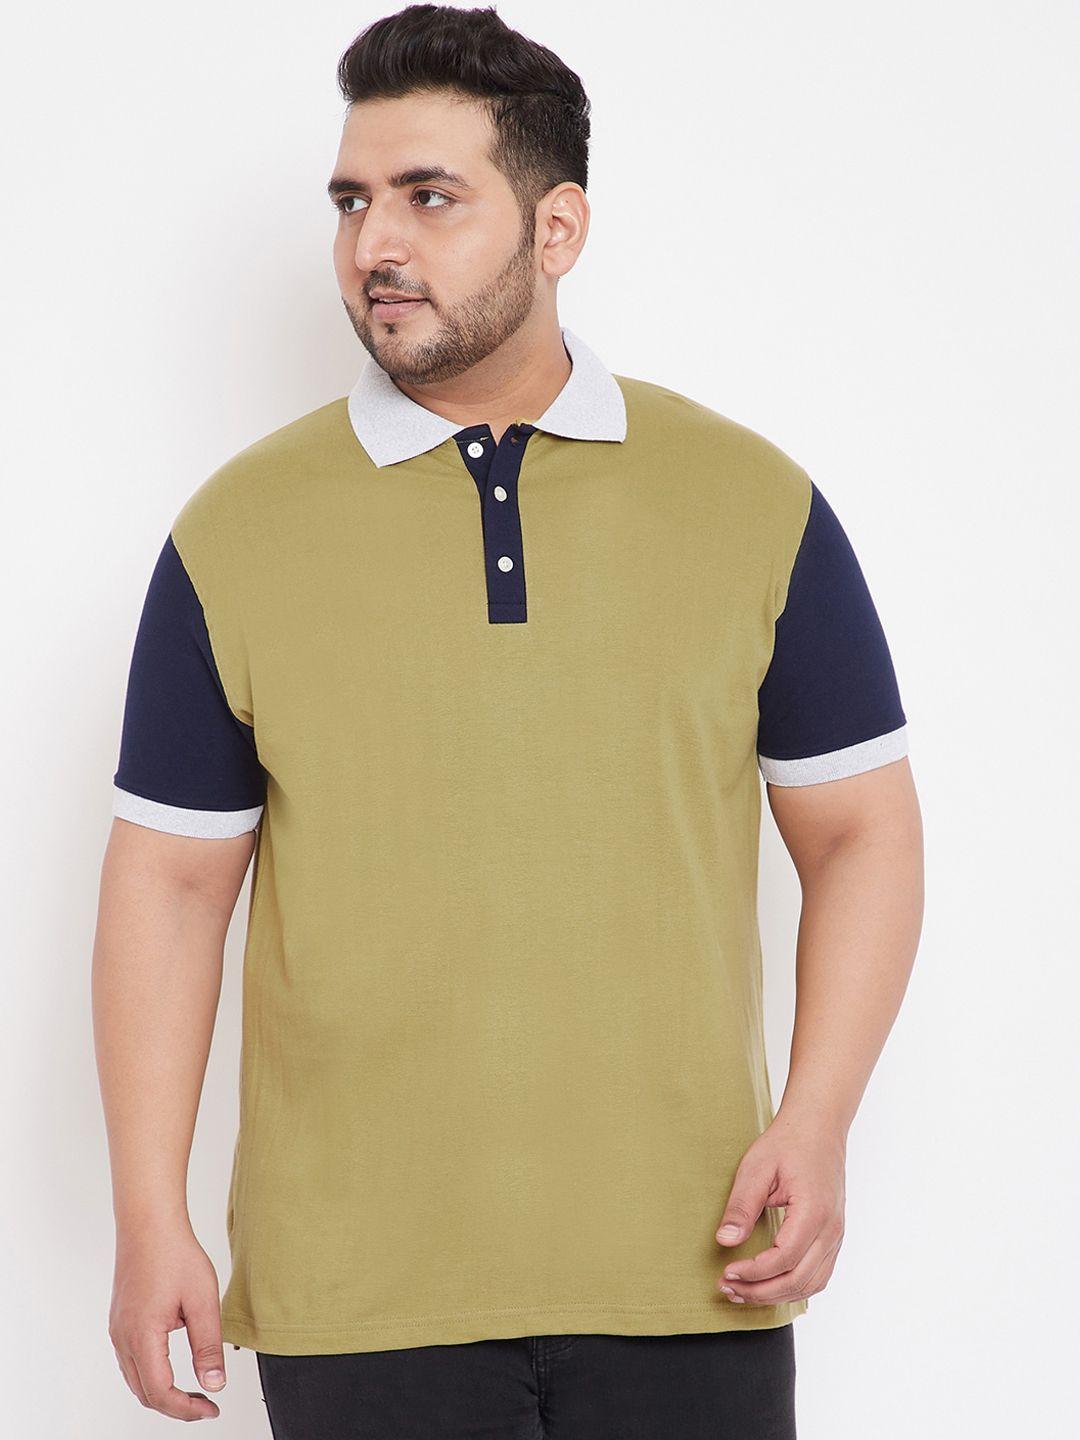 bigbanana men olive green & navy blue solid colorblocked collar t-shirt